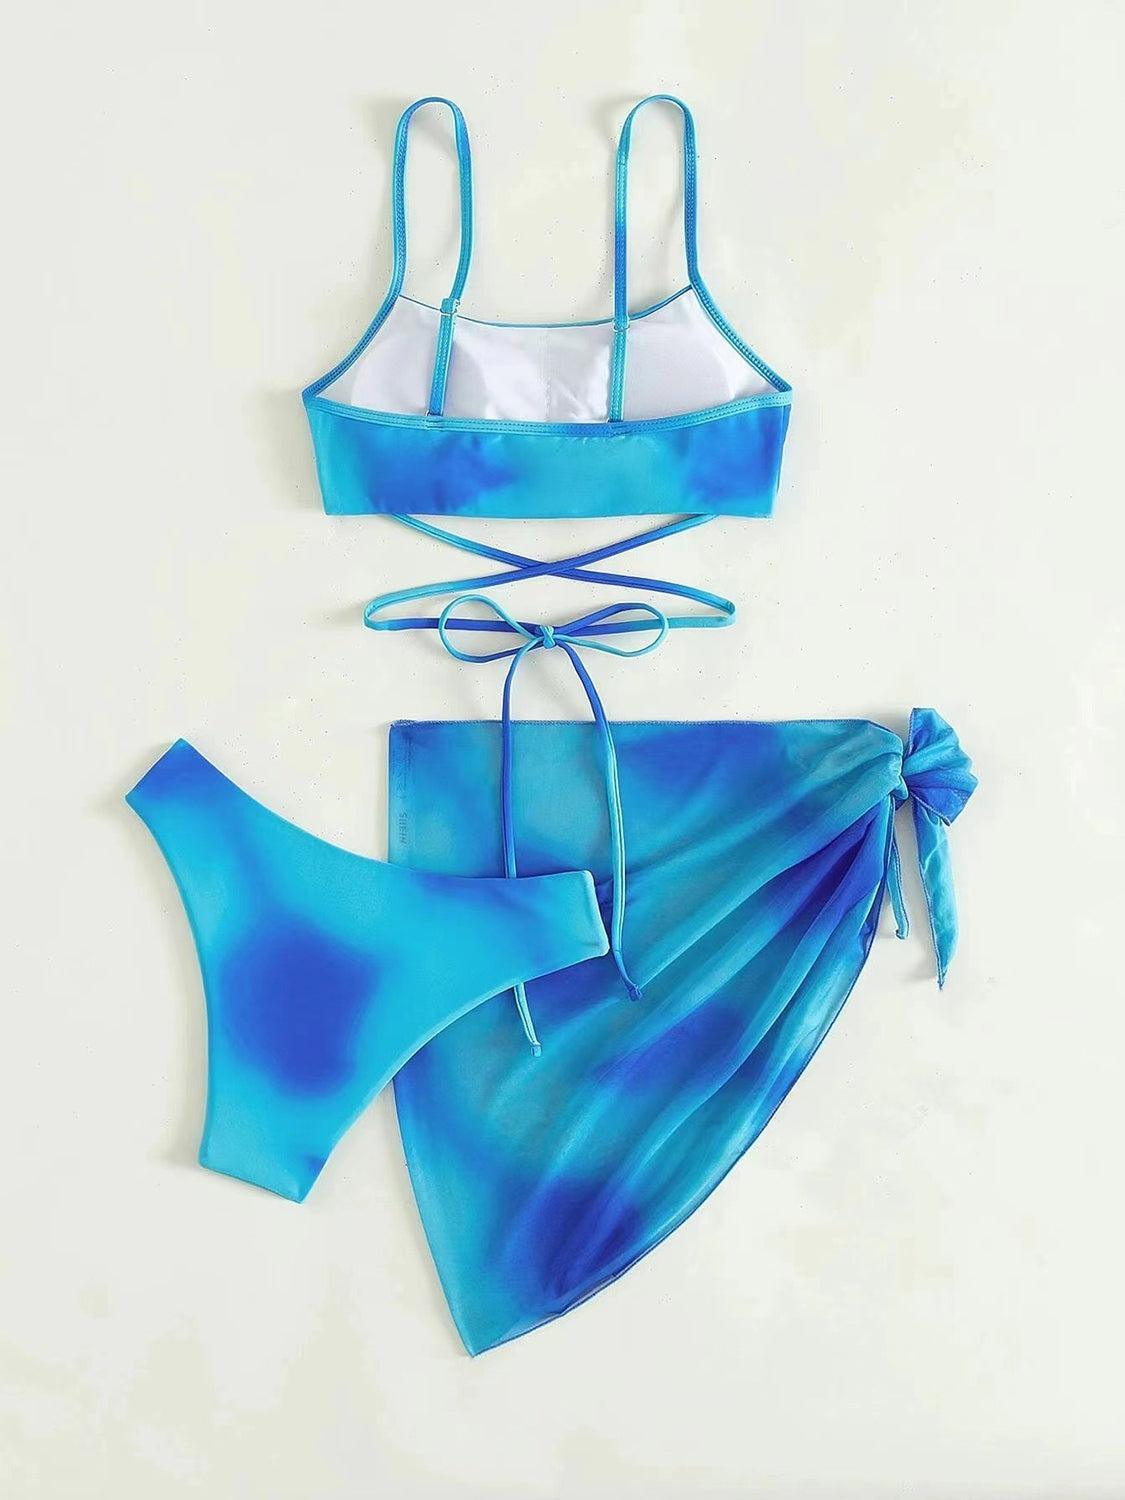 a blue and white bikini top and bottom